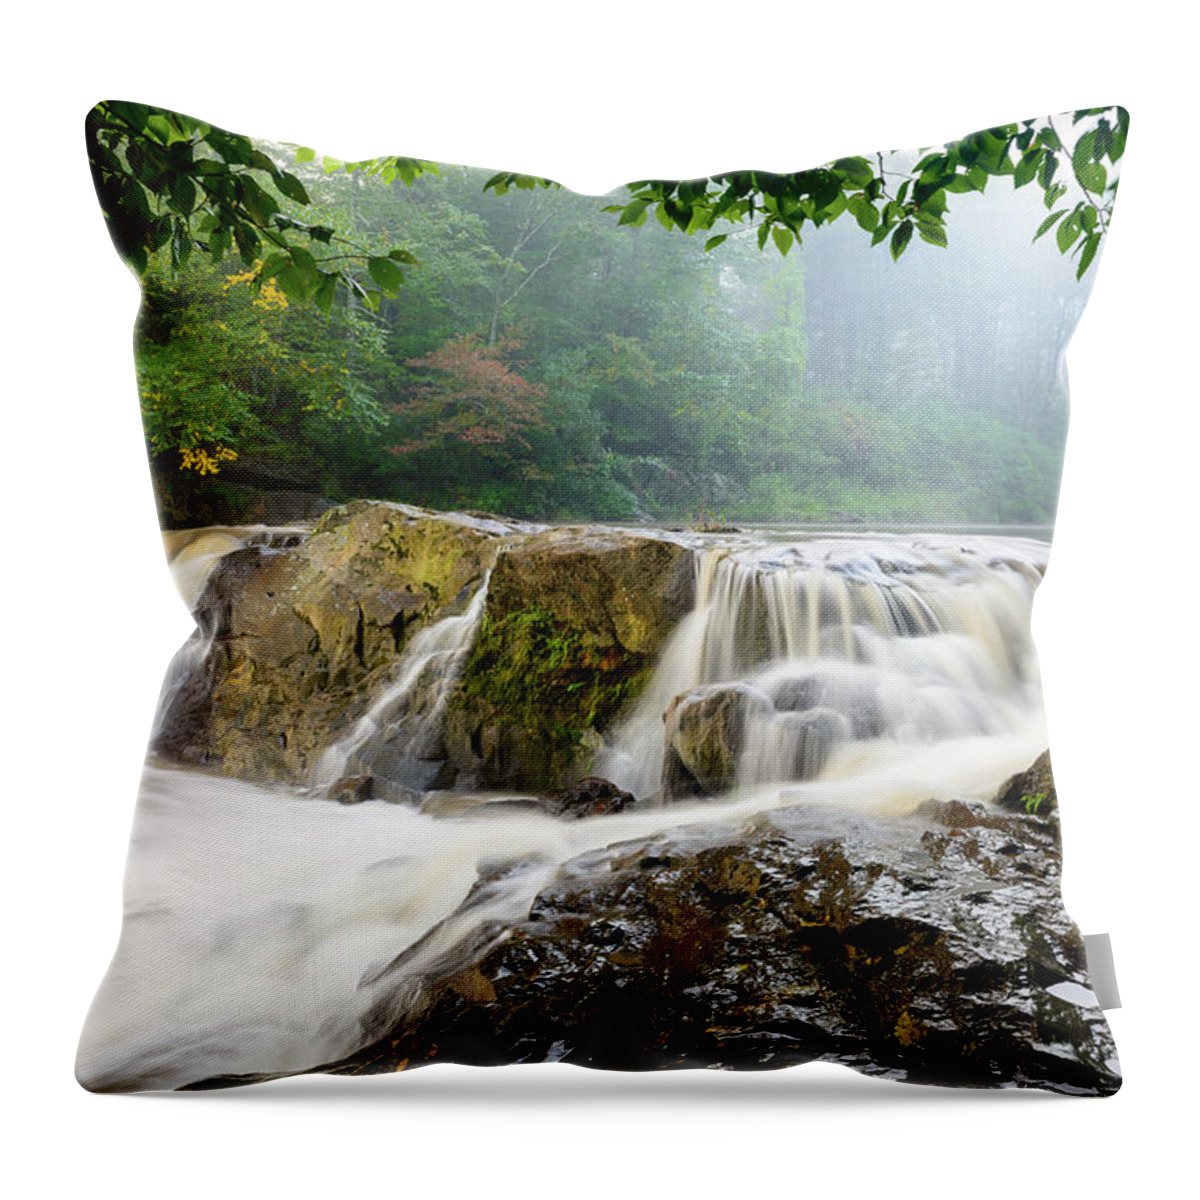 Chestnut Throw Pillow featuring the photograph Misty Creek by Michael Scott